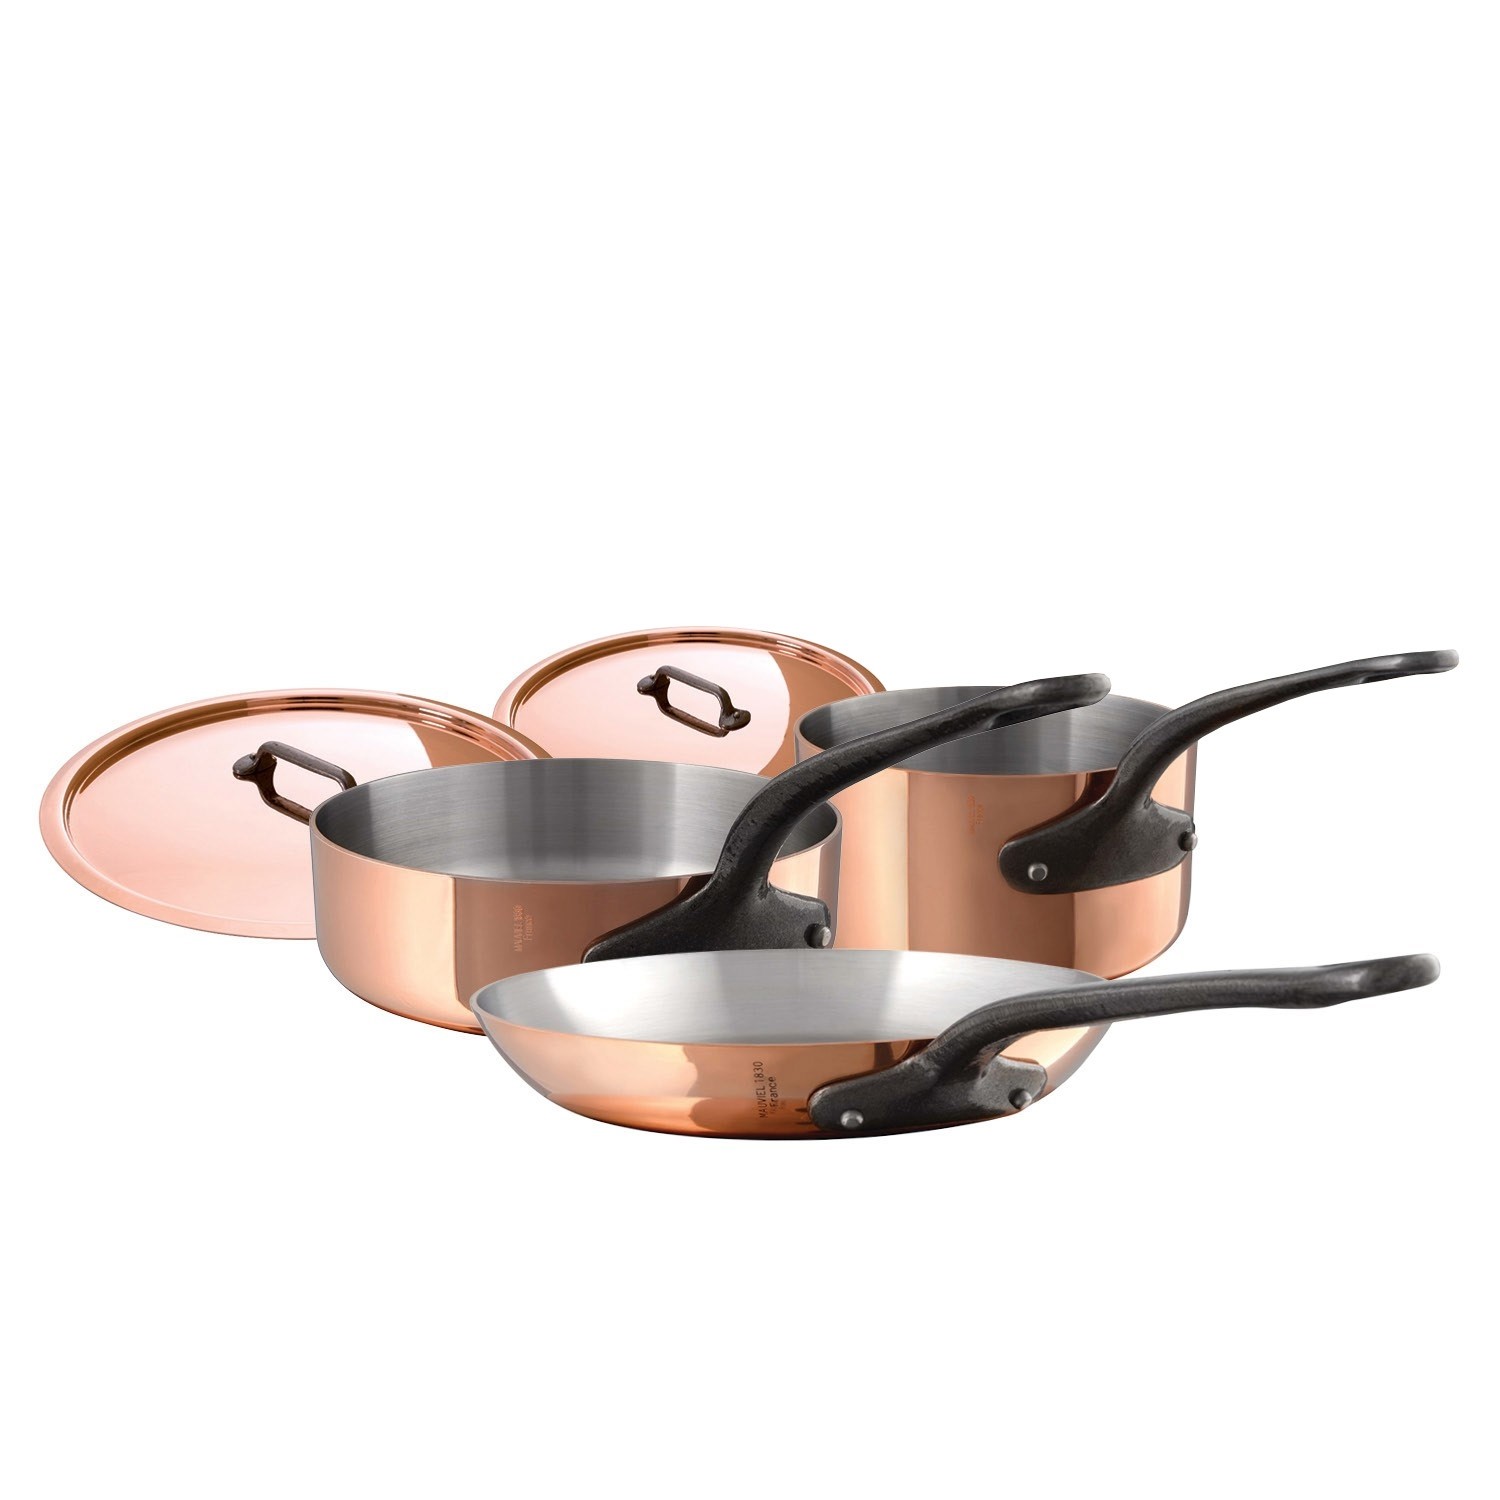 Mauviel Copper 5-Piece Cookware Set